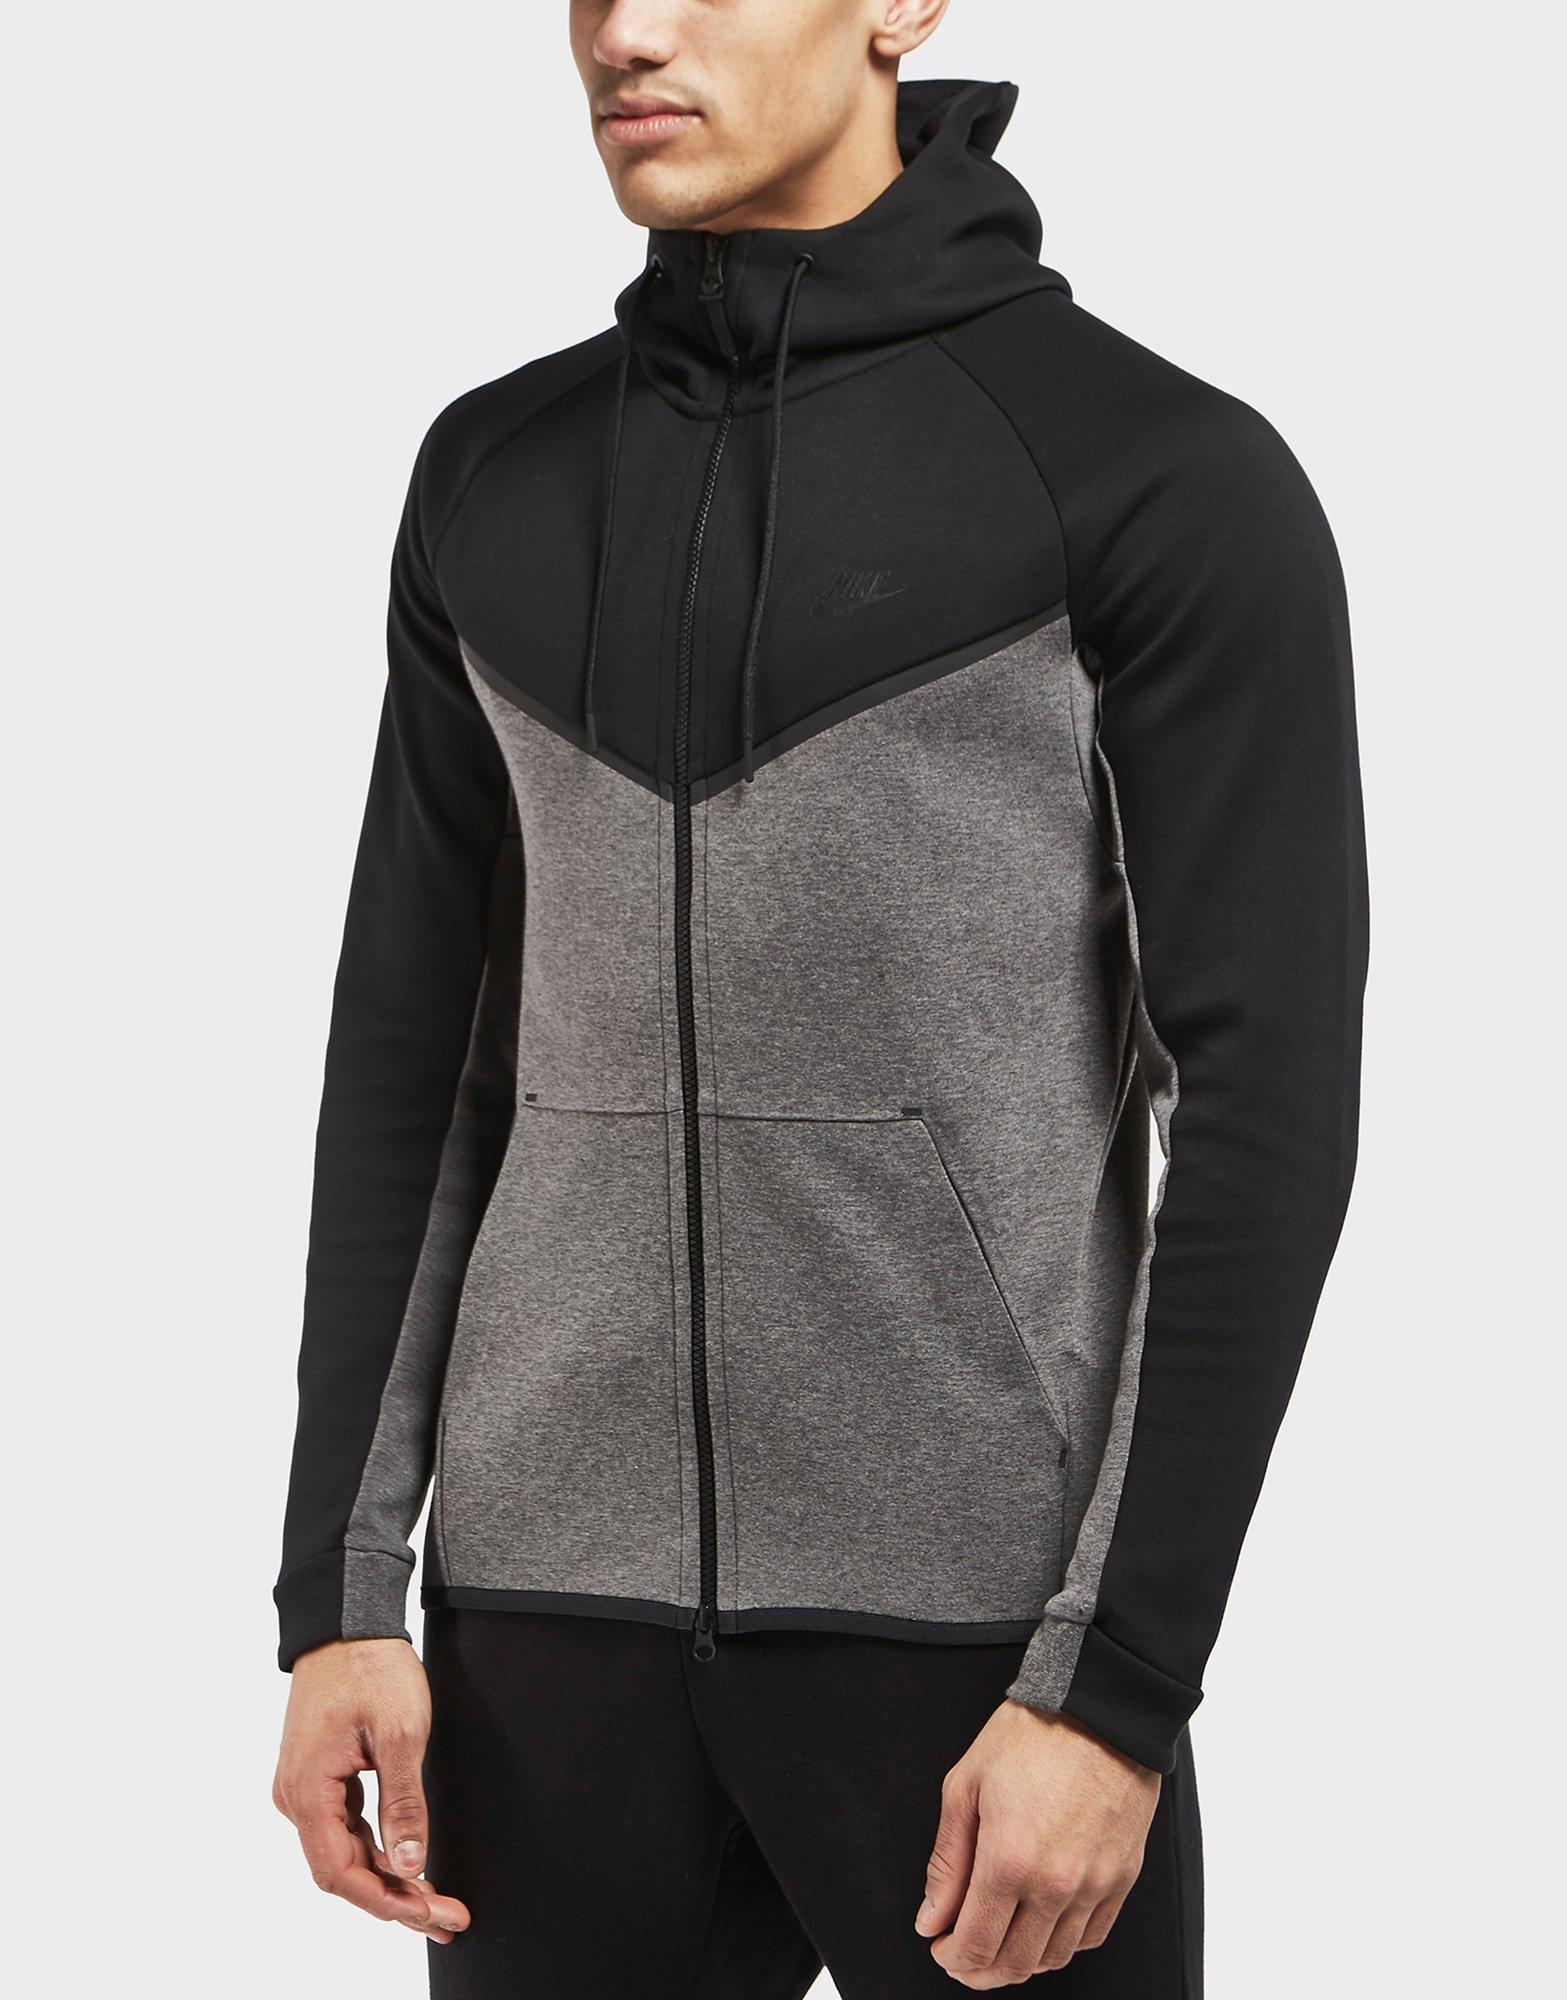 nike tech fleece windrunner hoodie grey and black